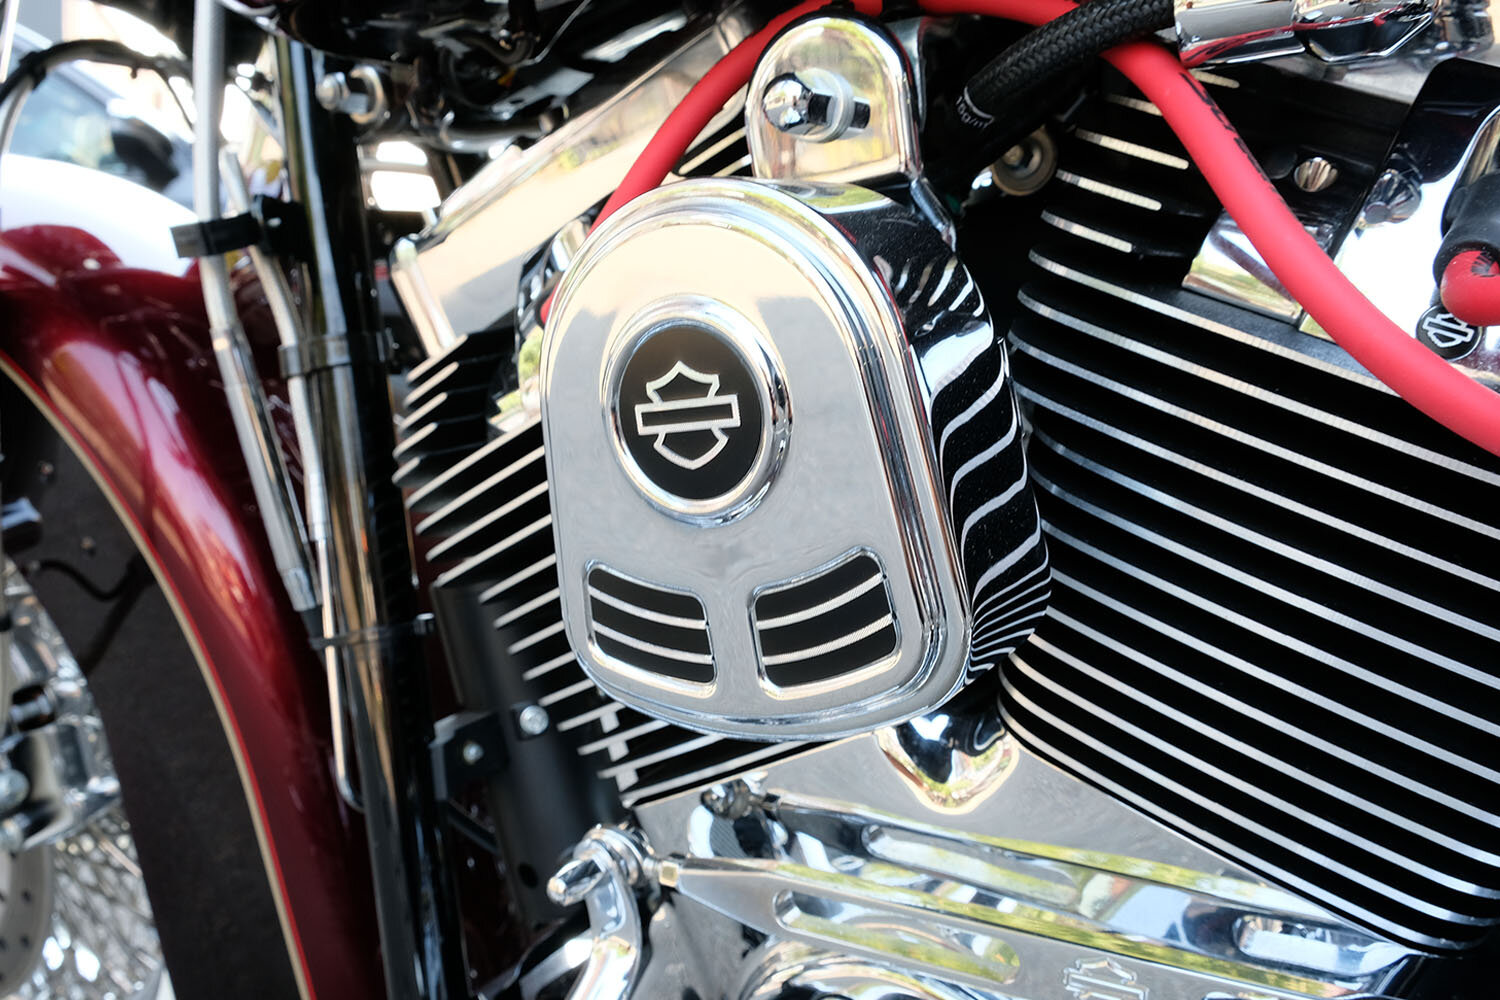 2014 Harley Davidson Softail Deluxe_0012_DSCF0241.jpg